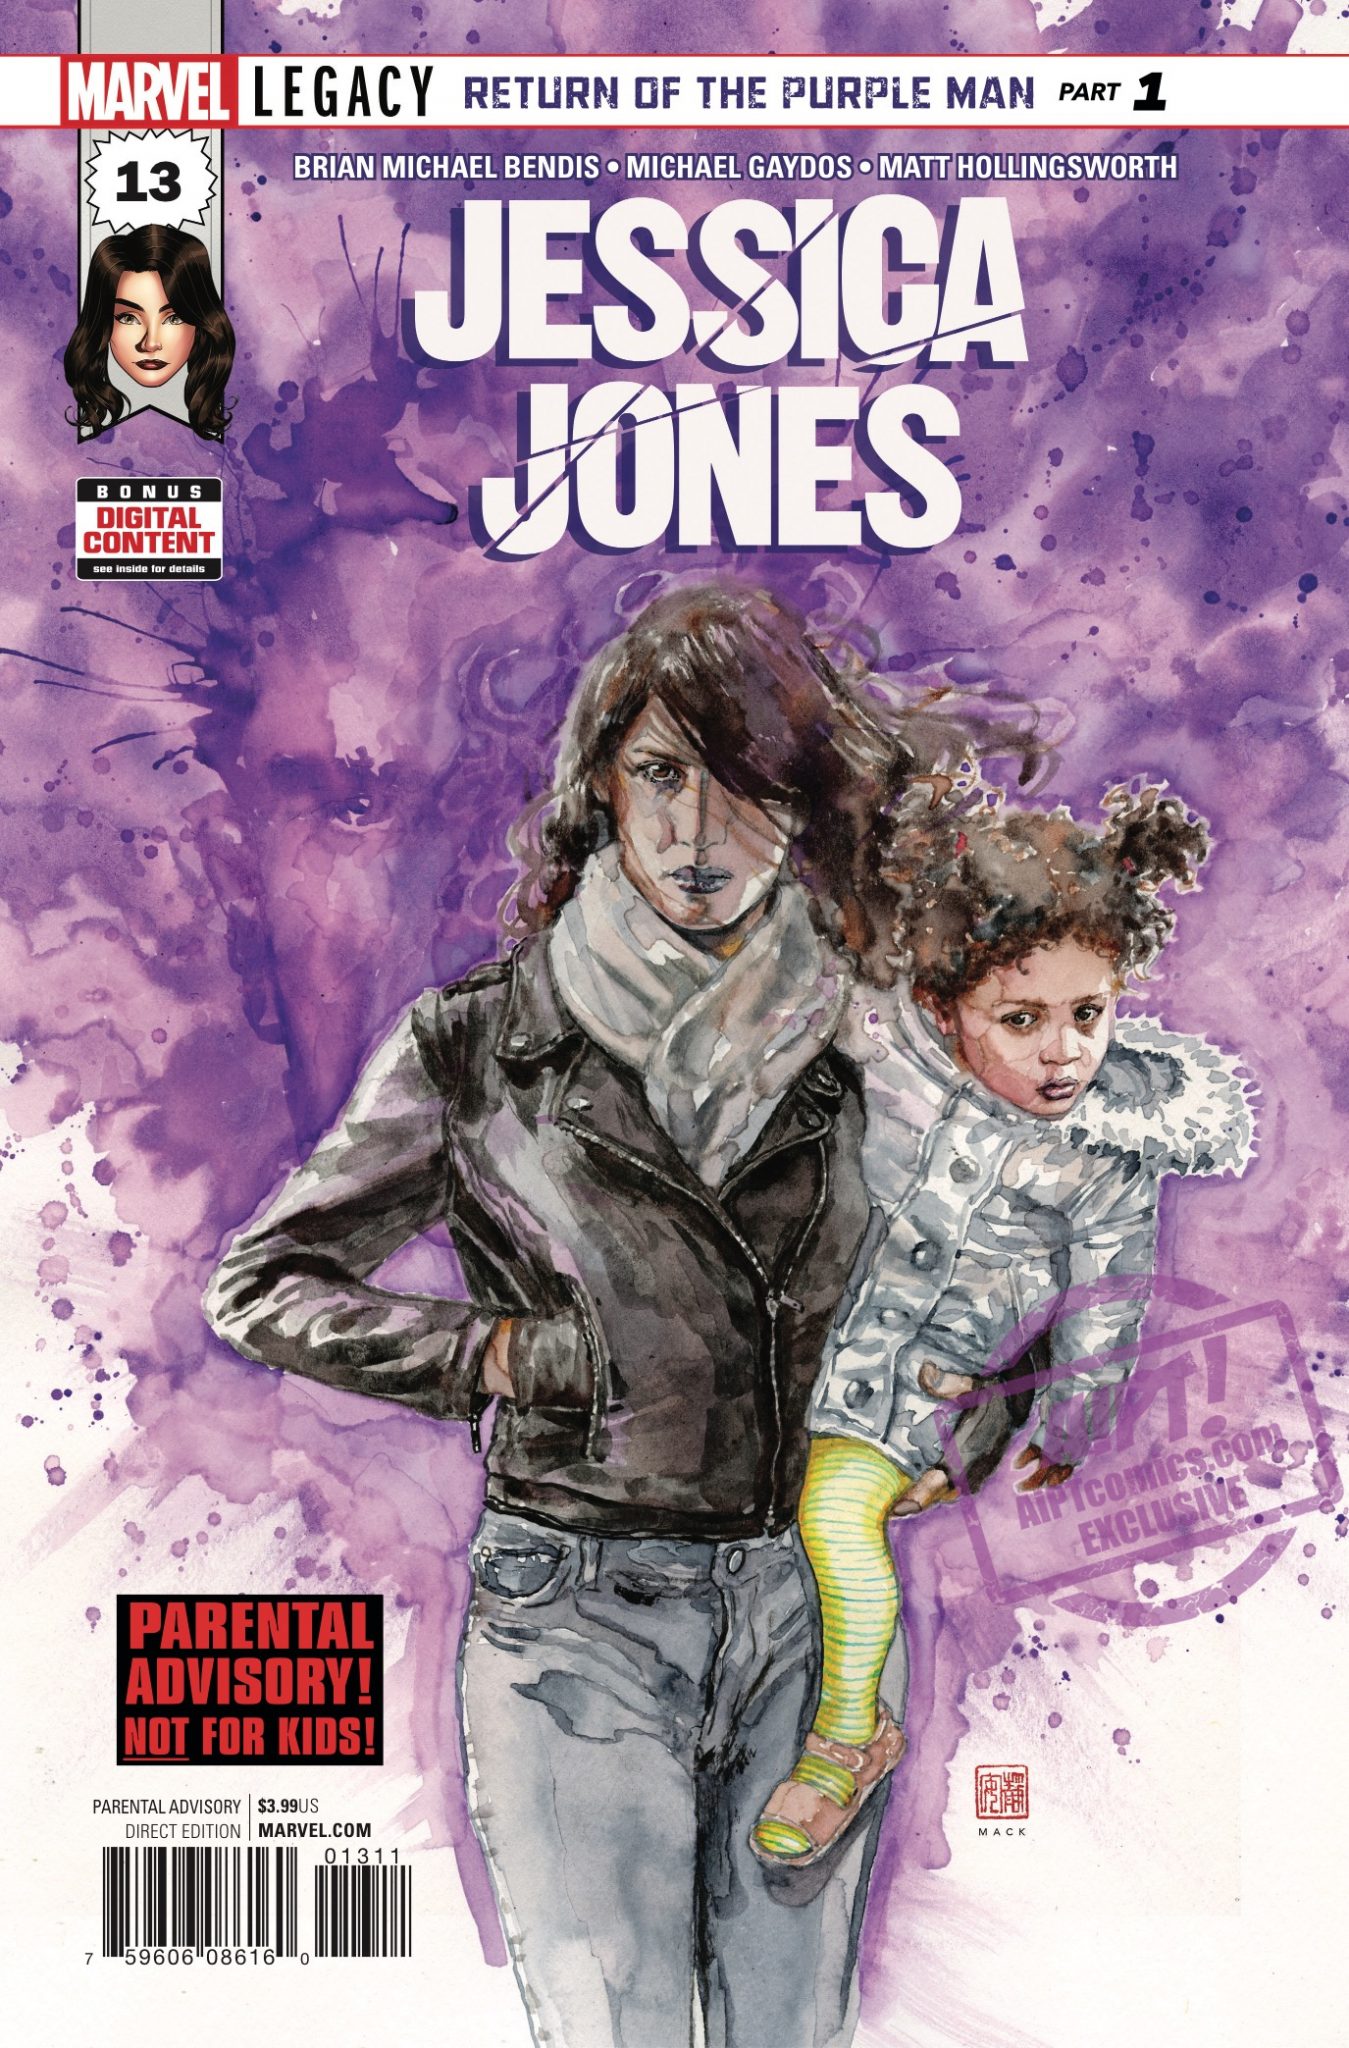 Jessica Jones #13 Review